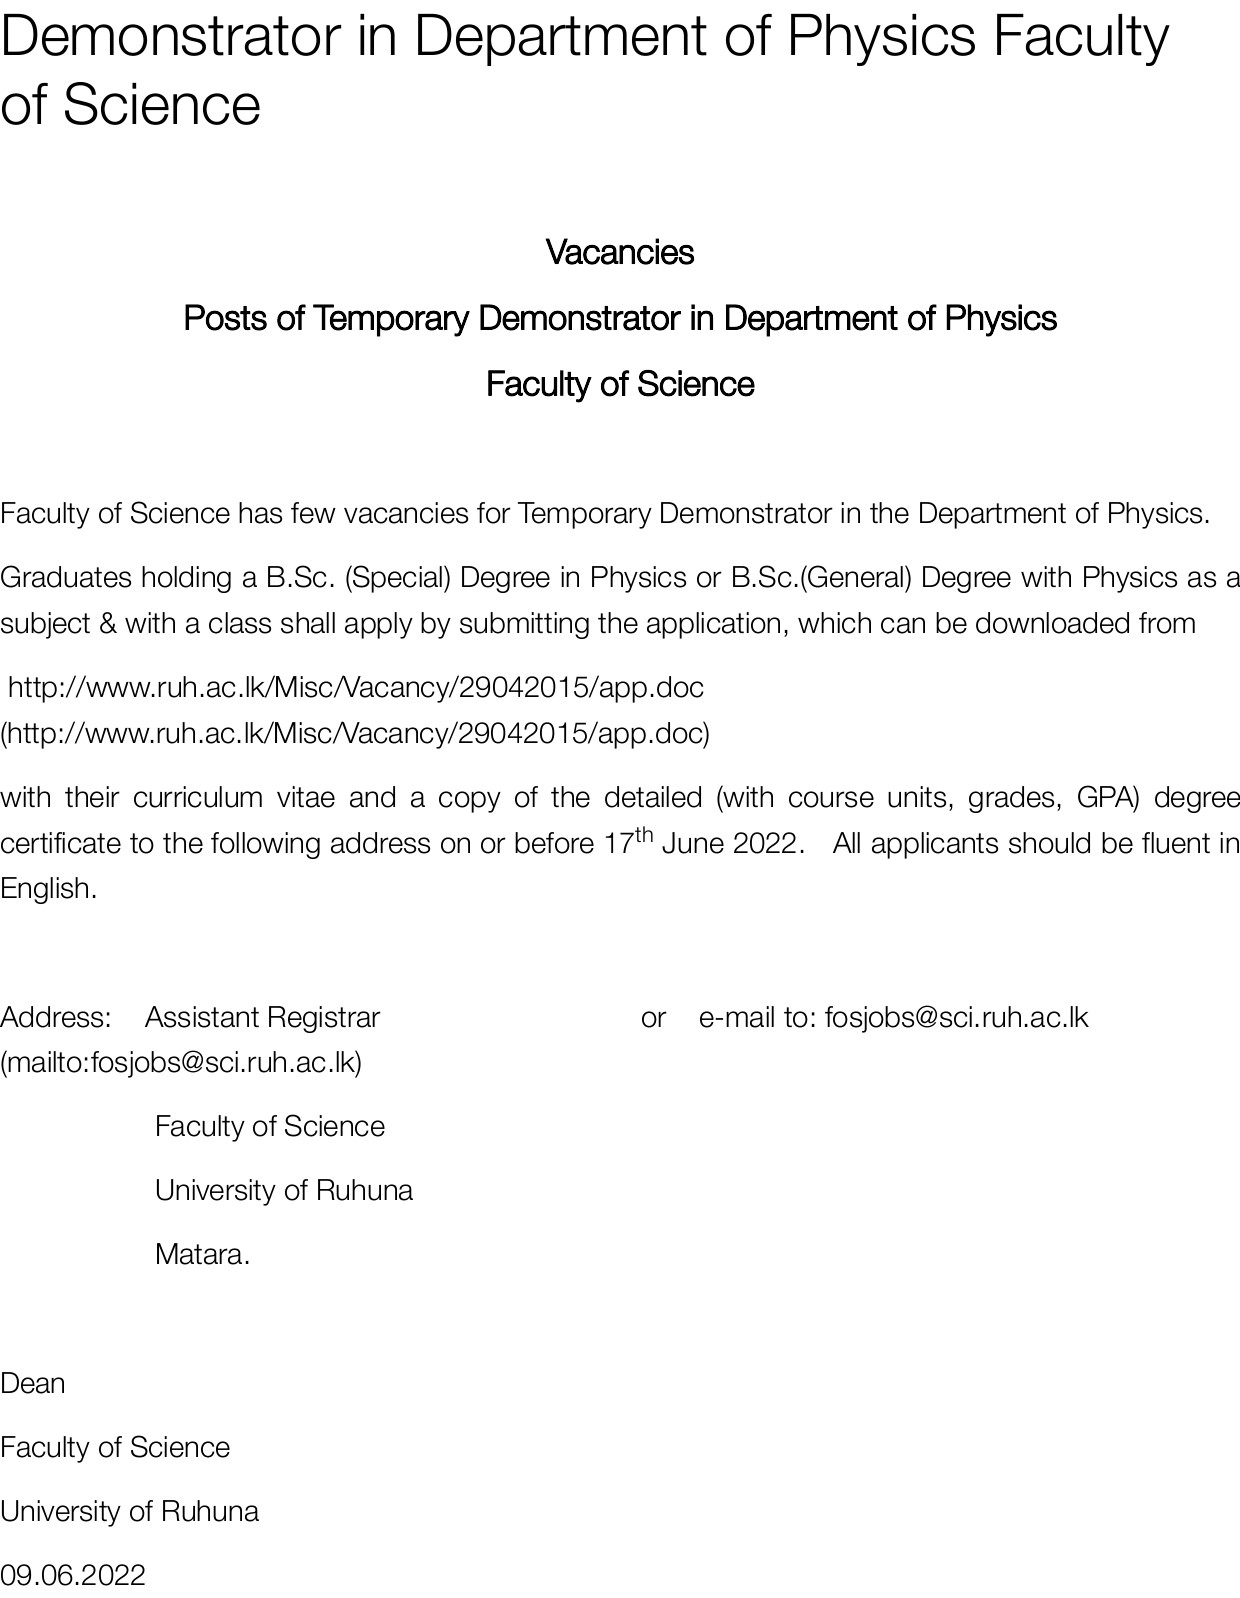 Temporary Demonstrator (Faculty of Science) Vacancy - University of Ruhuna Jobs Vacancies